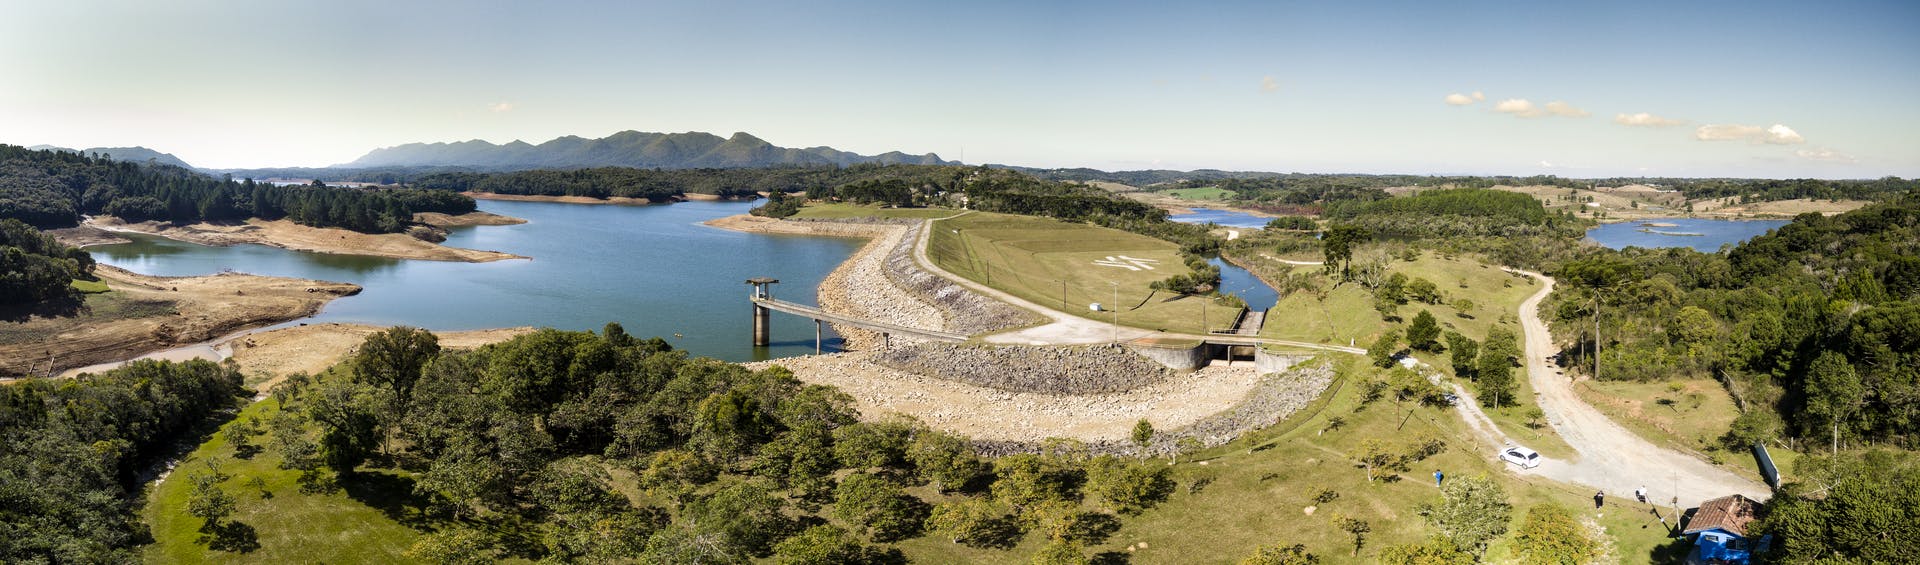 Barragem Piraquara 1 – Piraquara, PR